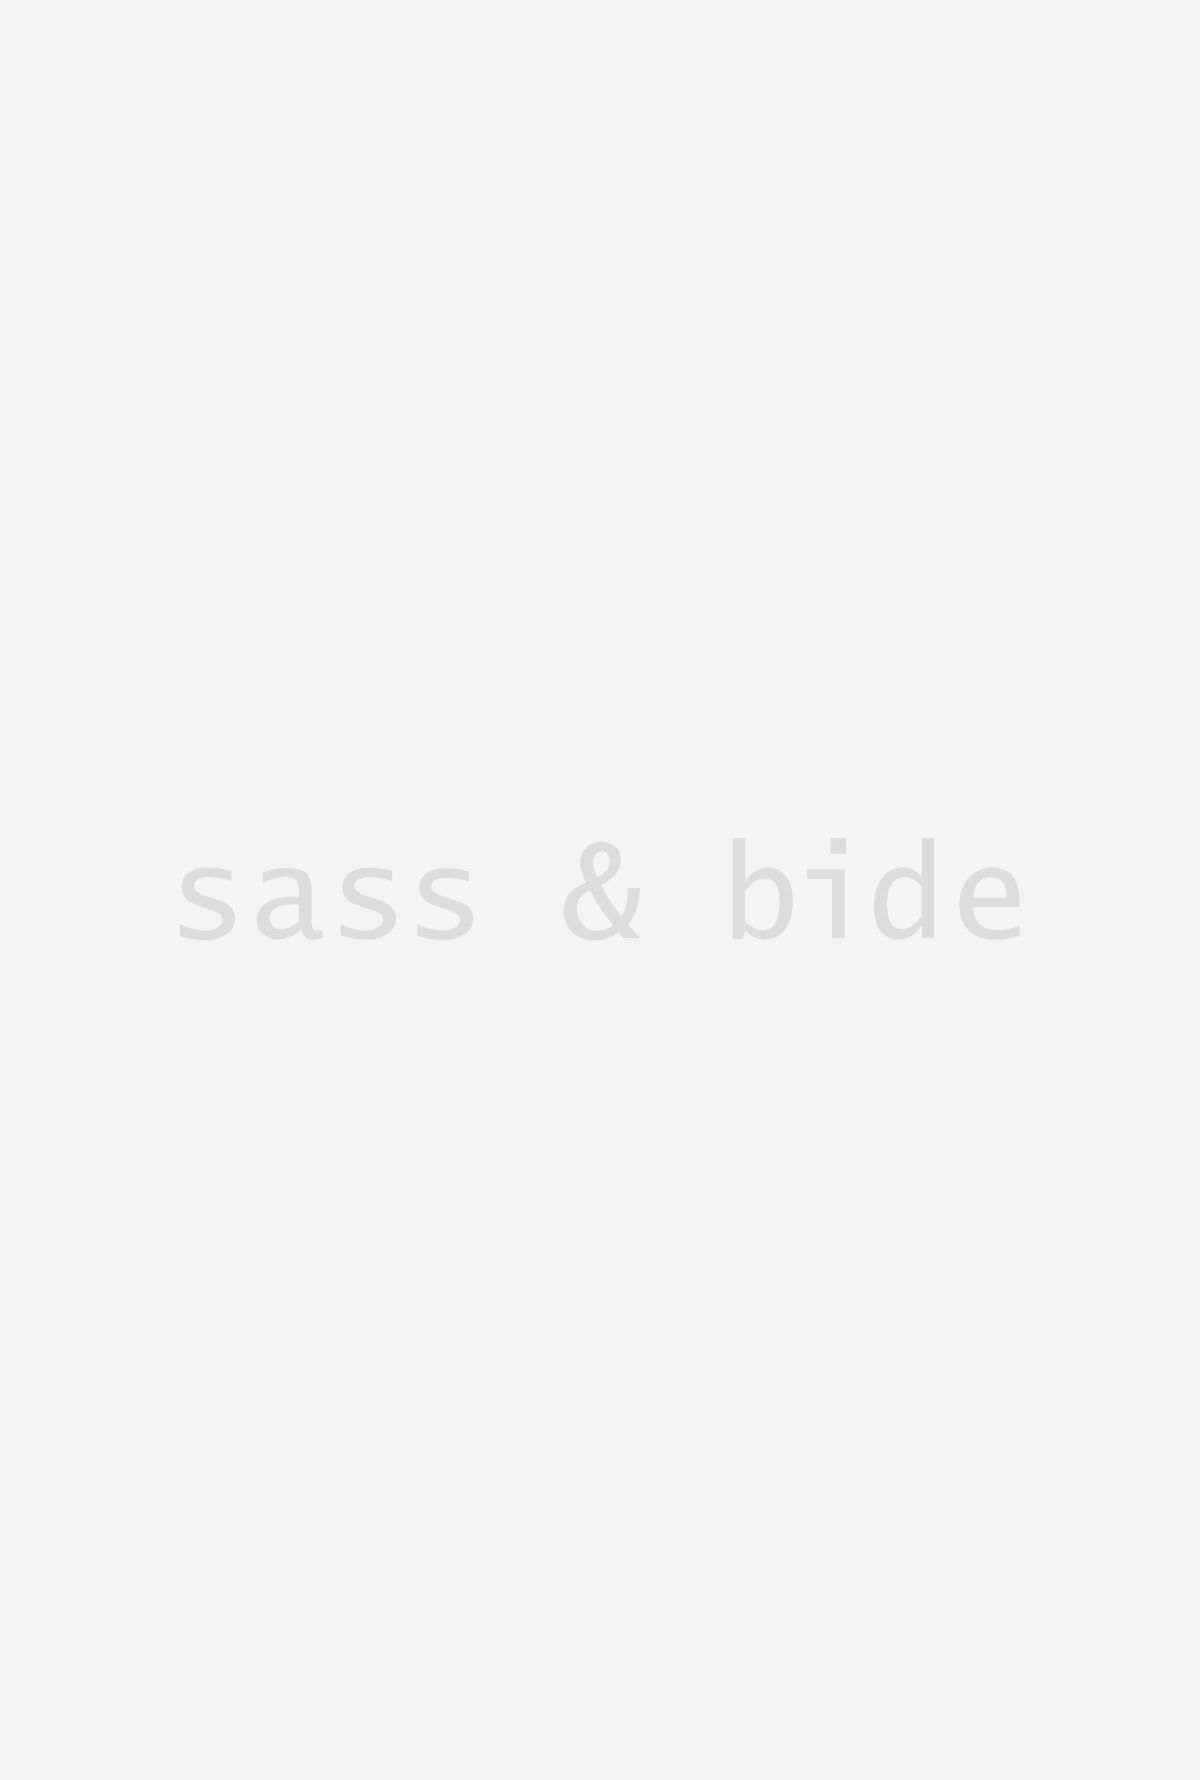 CREATIVE PLAY | Sass & Bide (AU, UK, US)